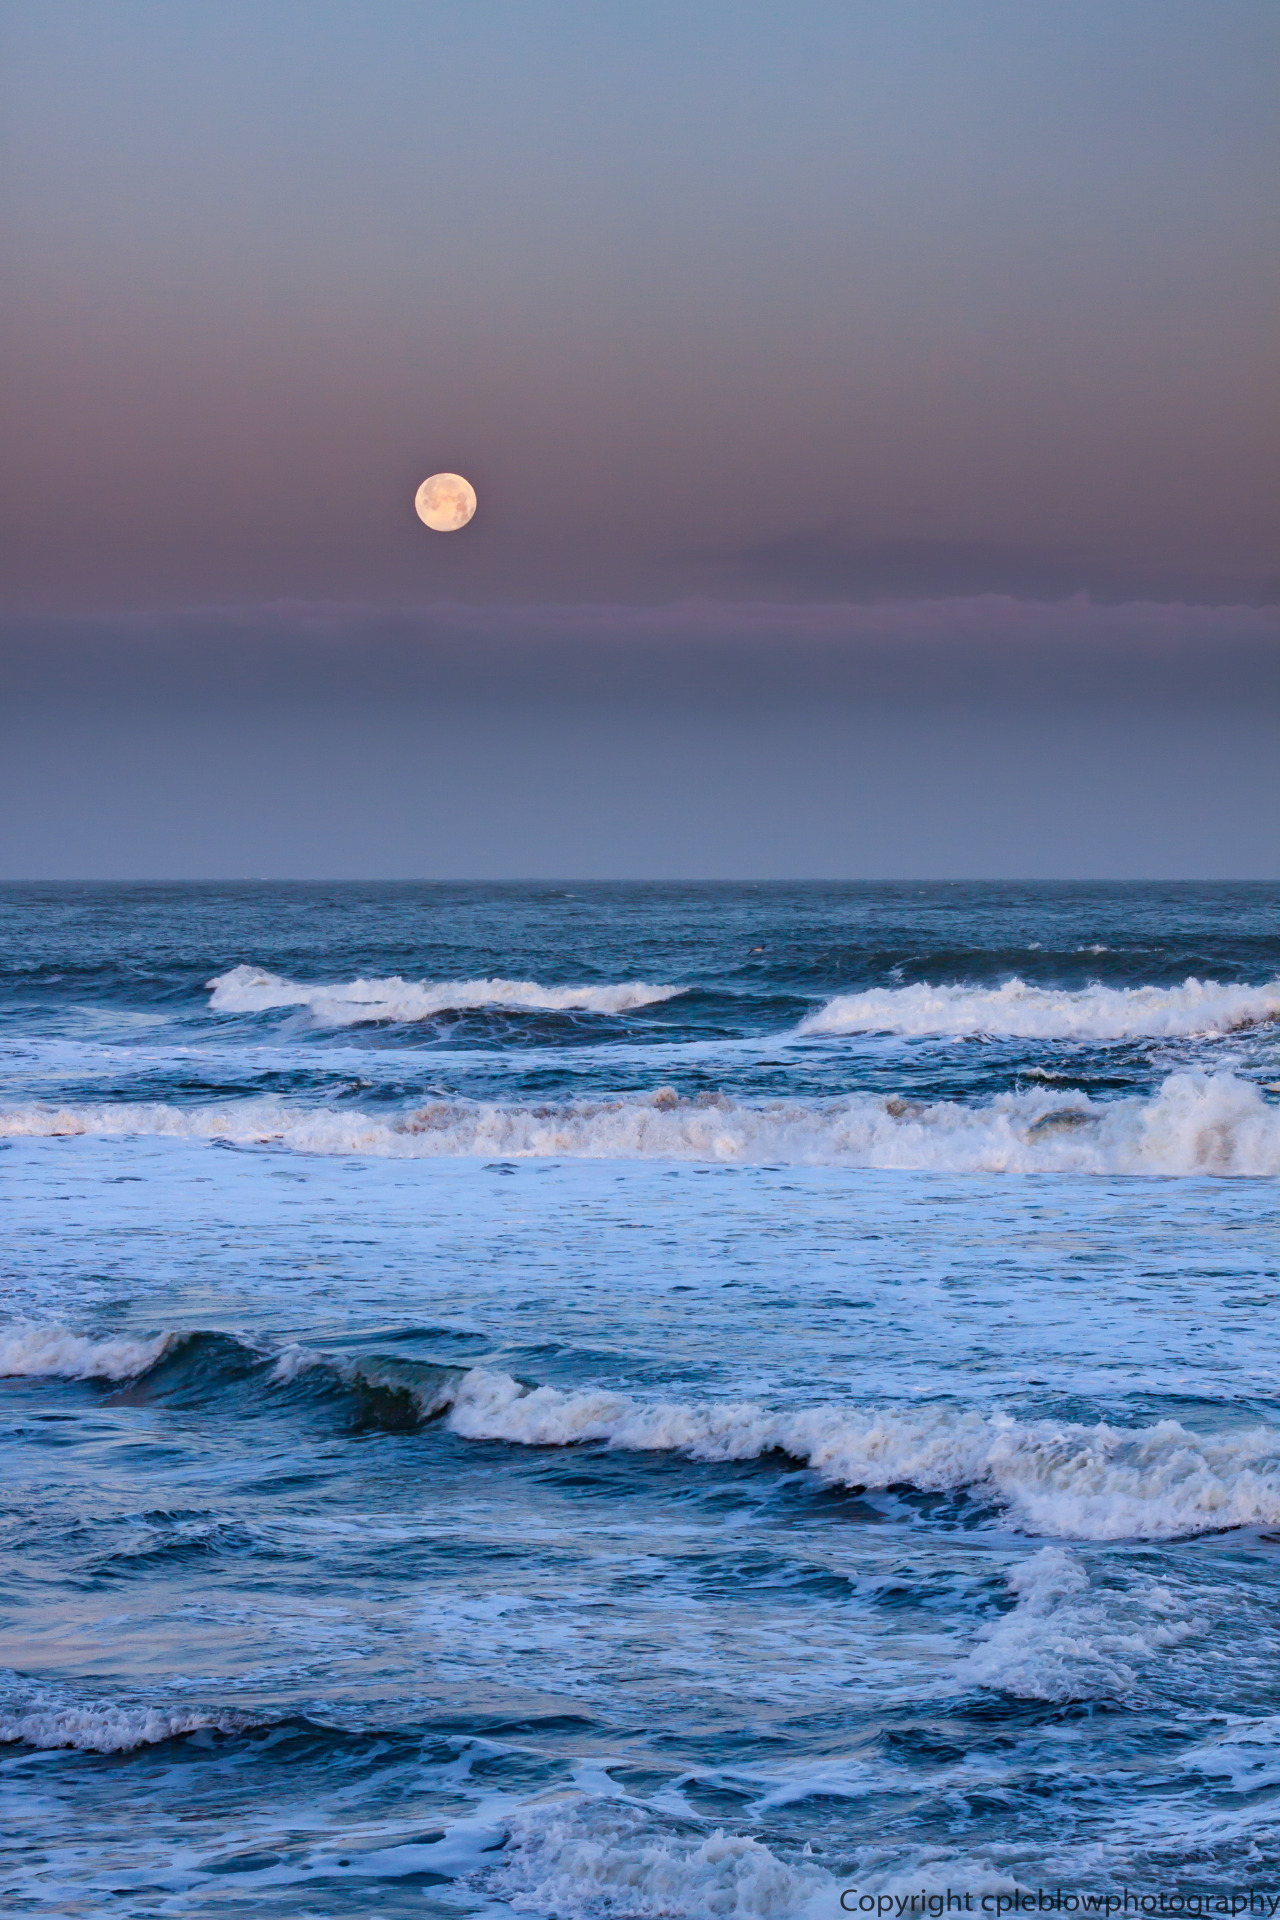 cpleblow photography — full moon setting off of ocean beach near ...